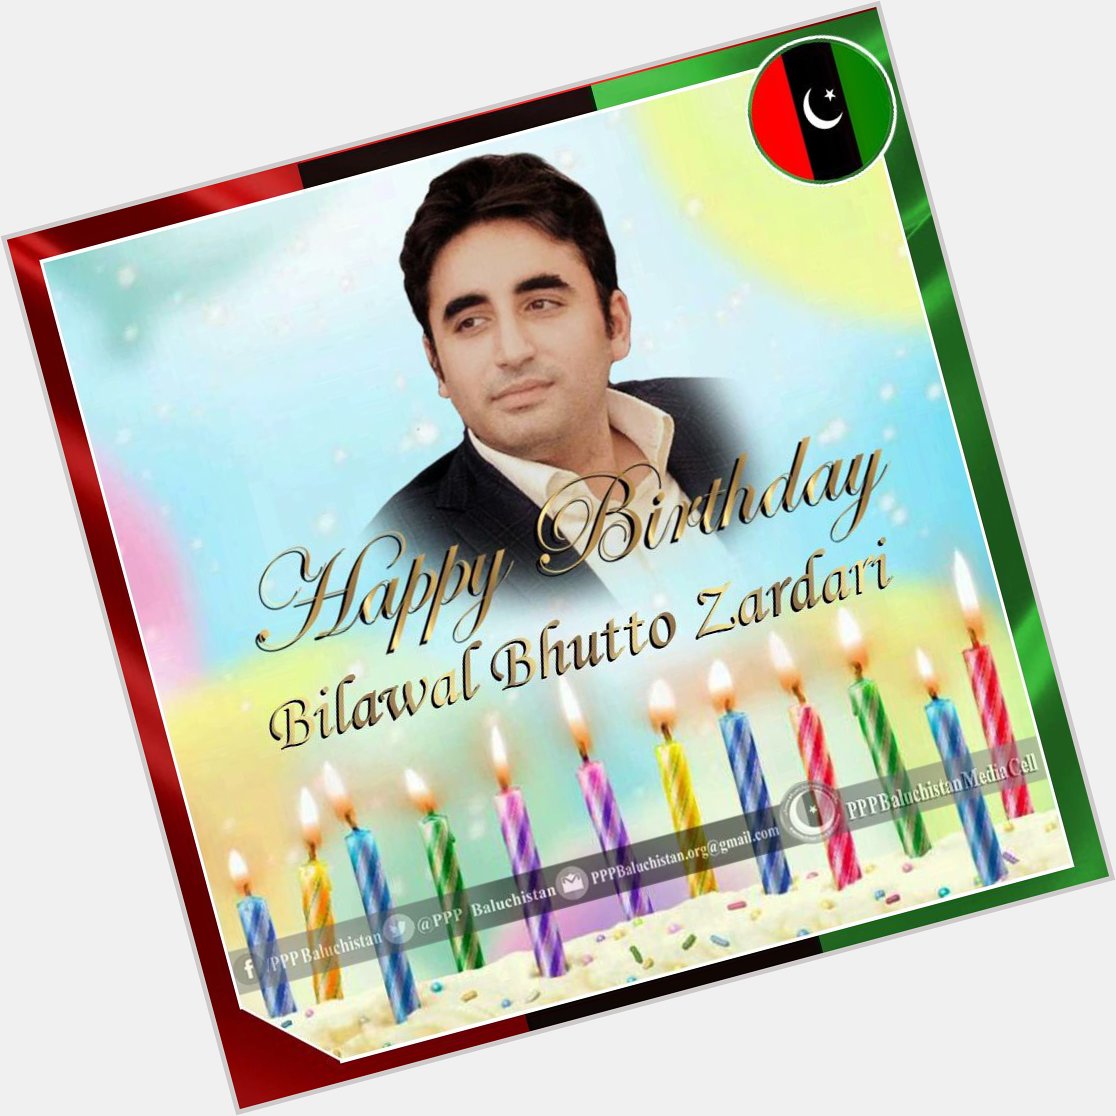 Happy birthday my great leader Bilawal Bhutto zardari sab Allah bless you 